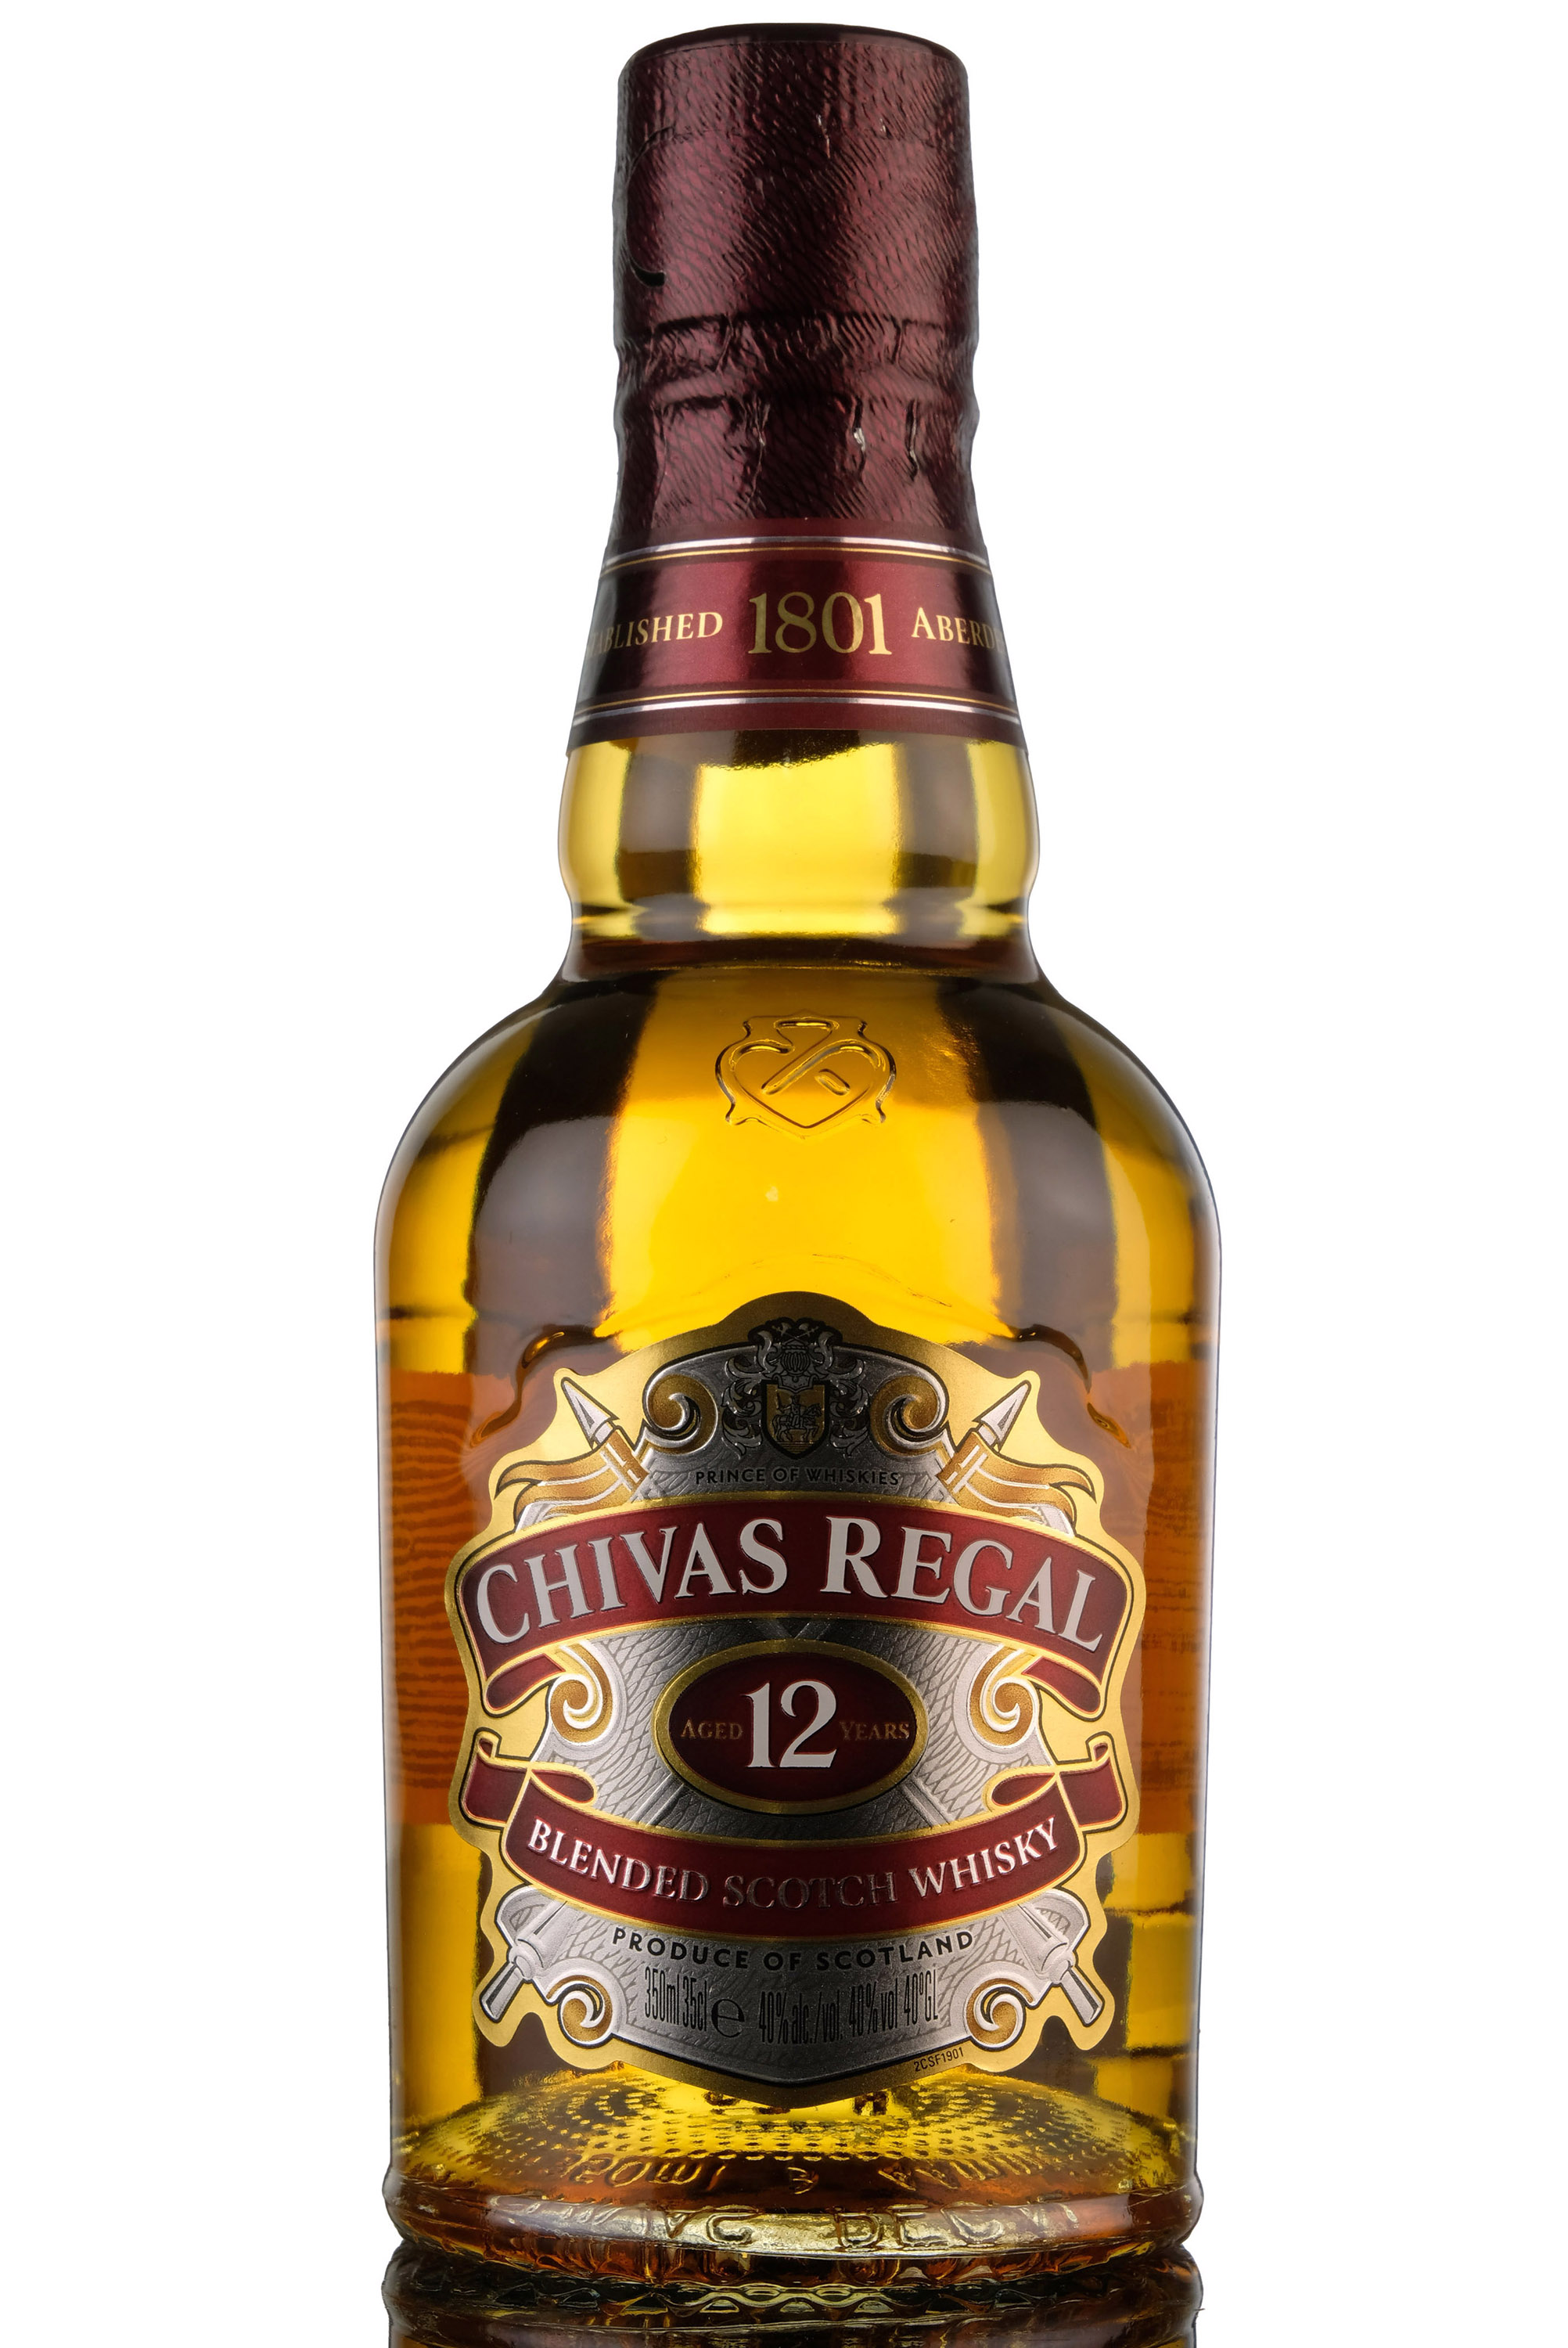 Chivas Regal 12 Year Old - 2016 Release - Half Bottle